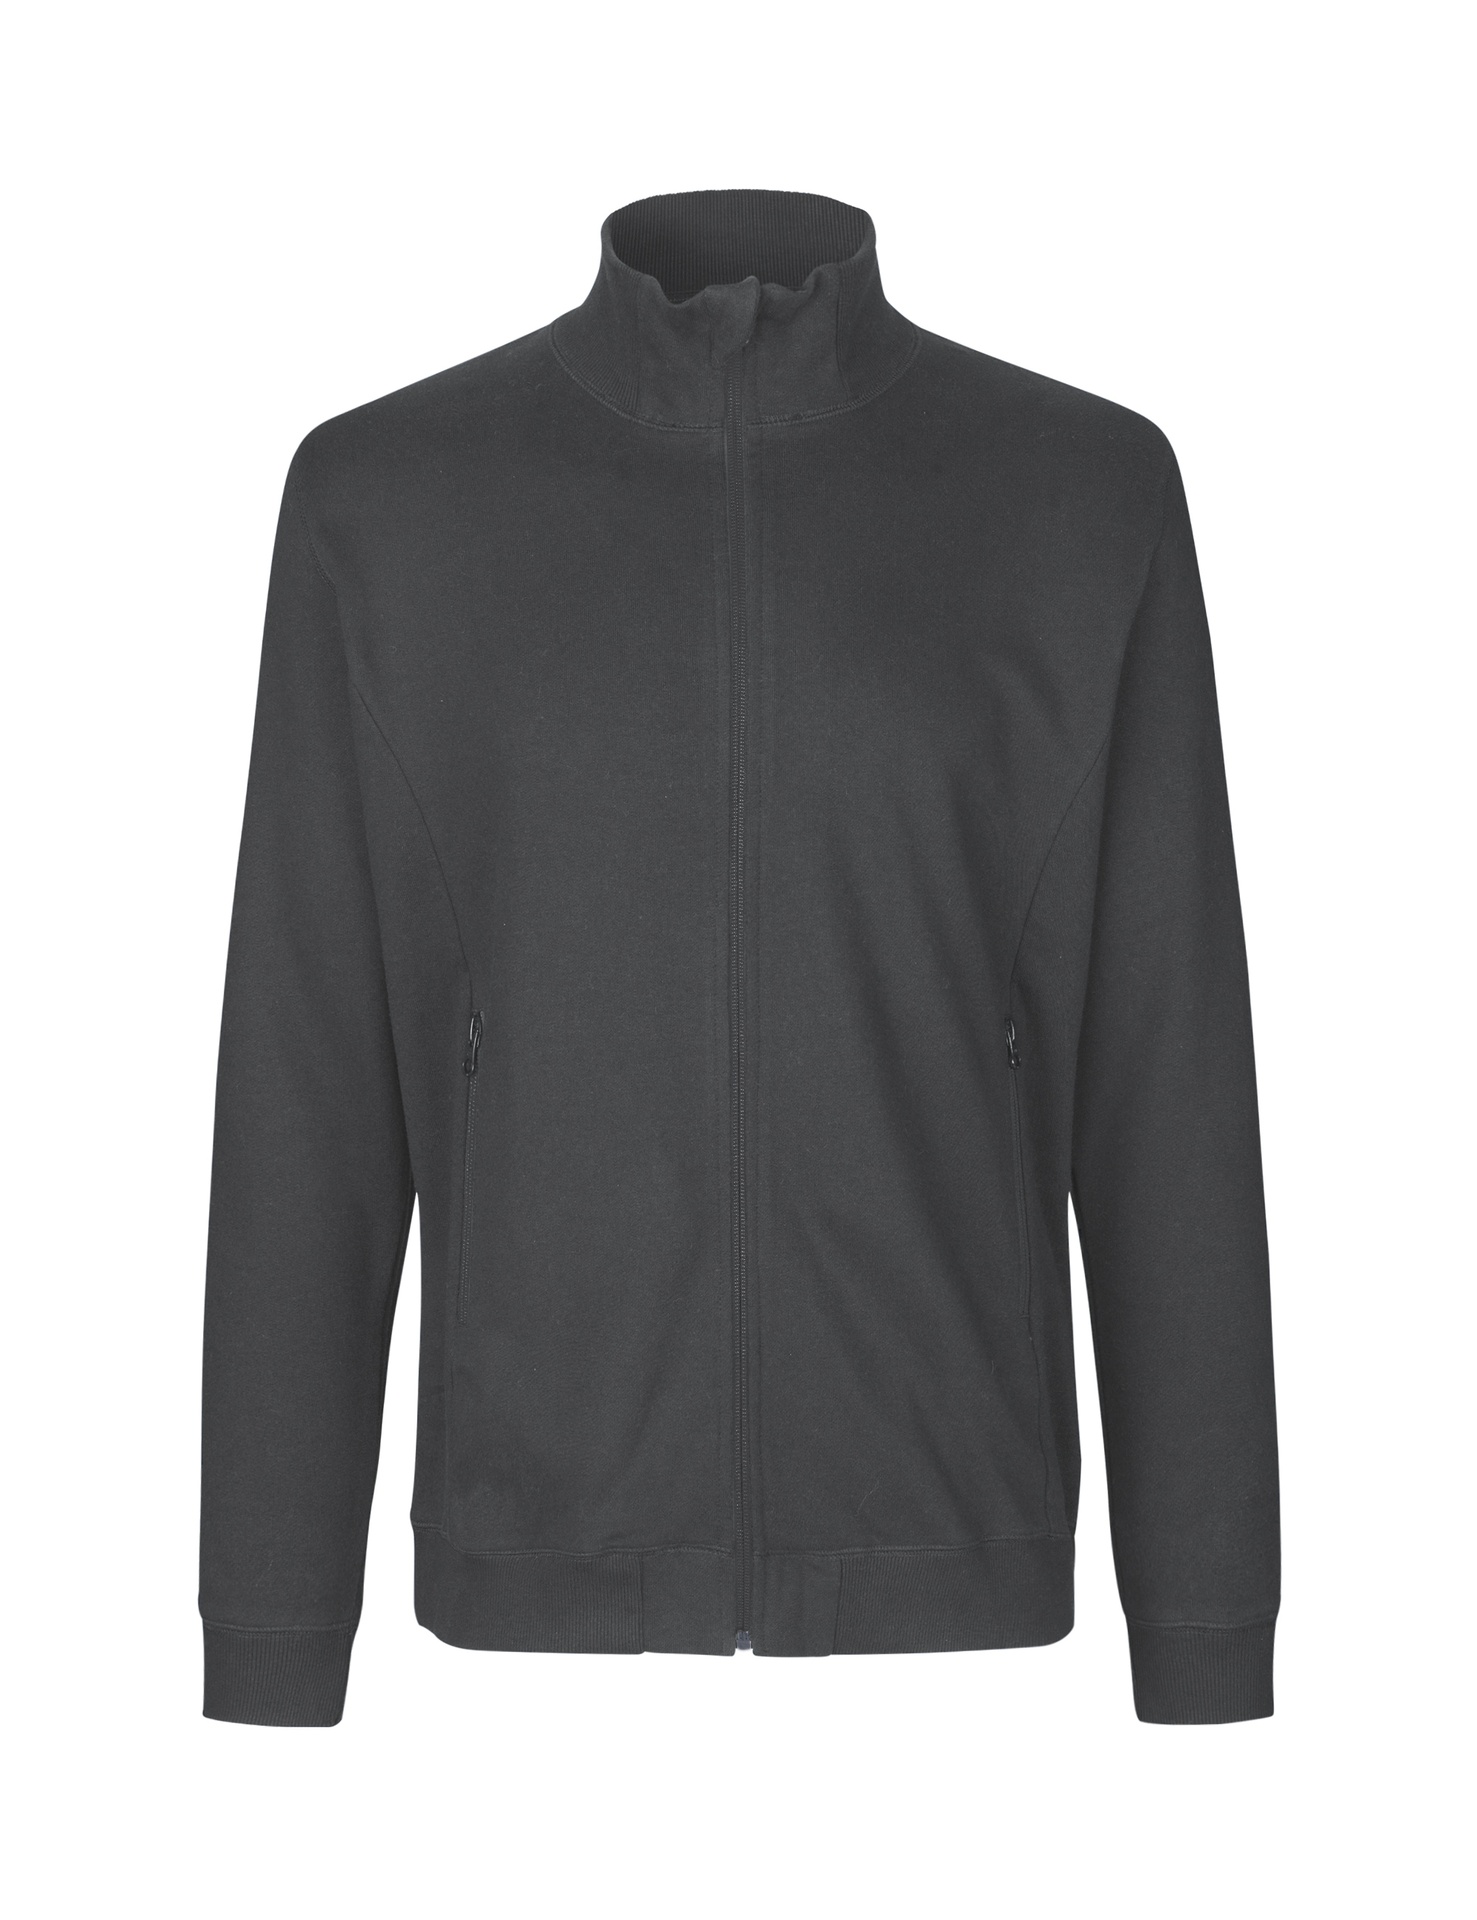 [PR/03645] Unisex High Neck Jacket (Charcoal 06, M)